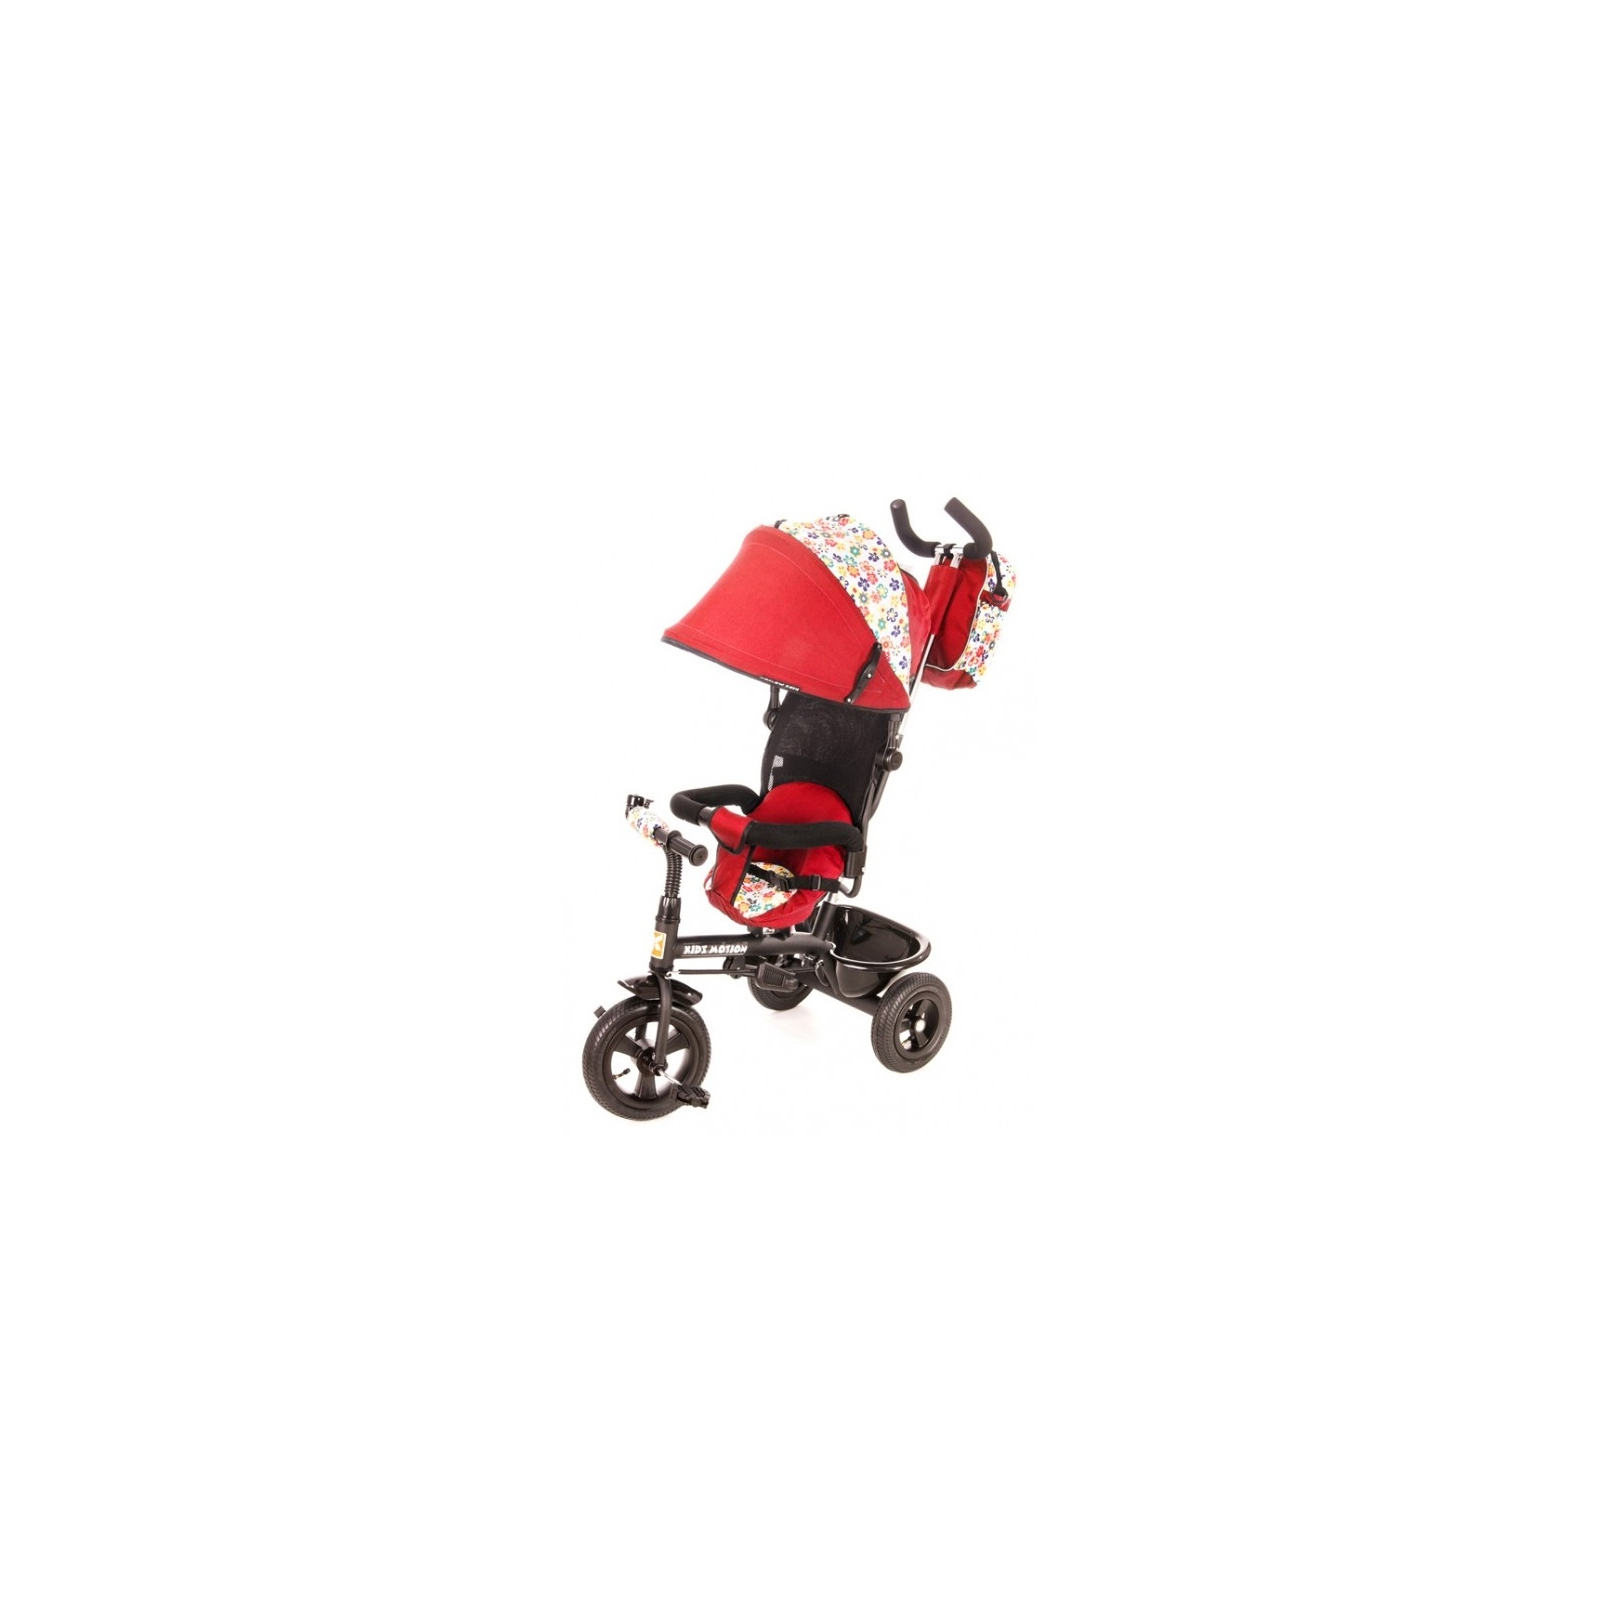 Детский велосипед KidzMotion Tobi Venture RED (115002/red)